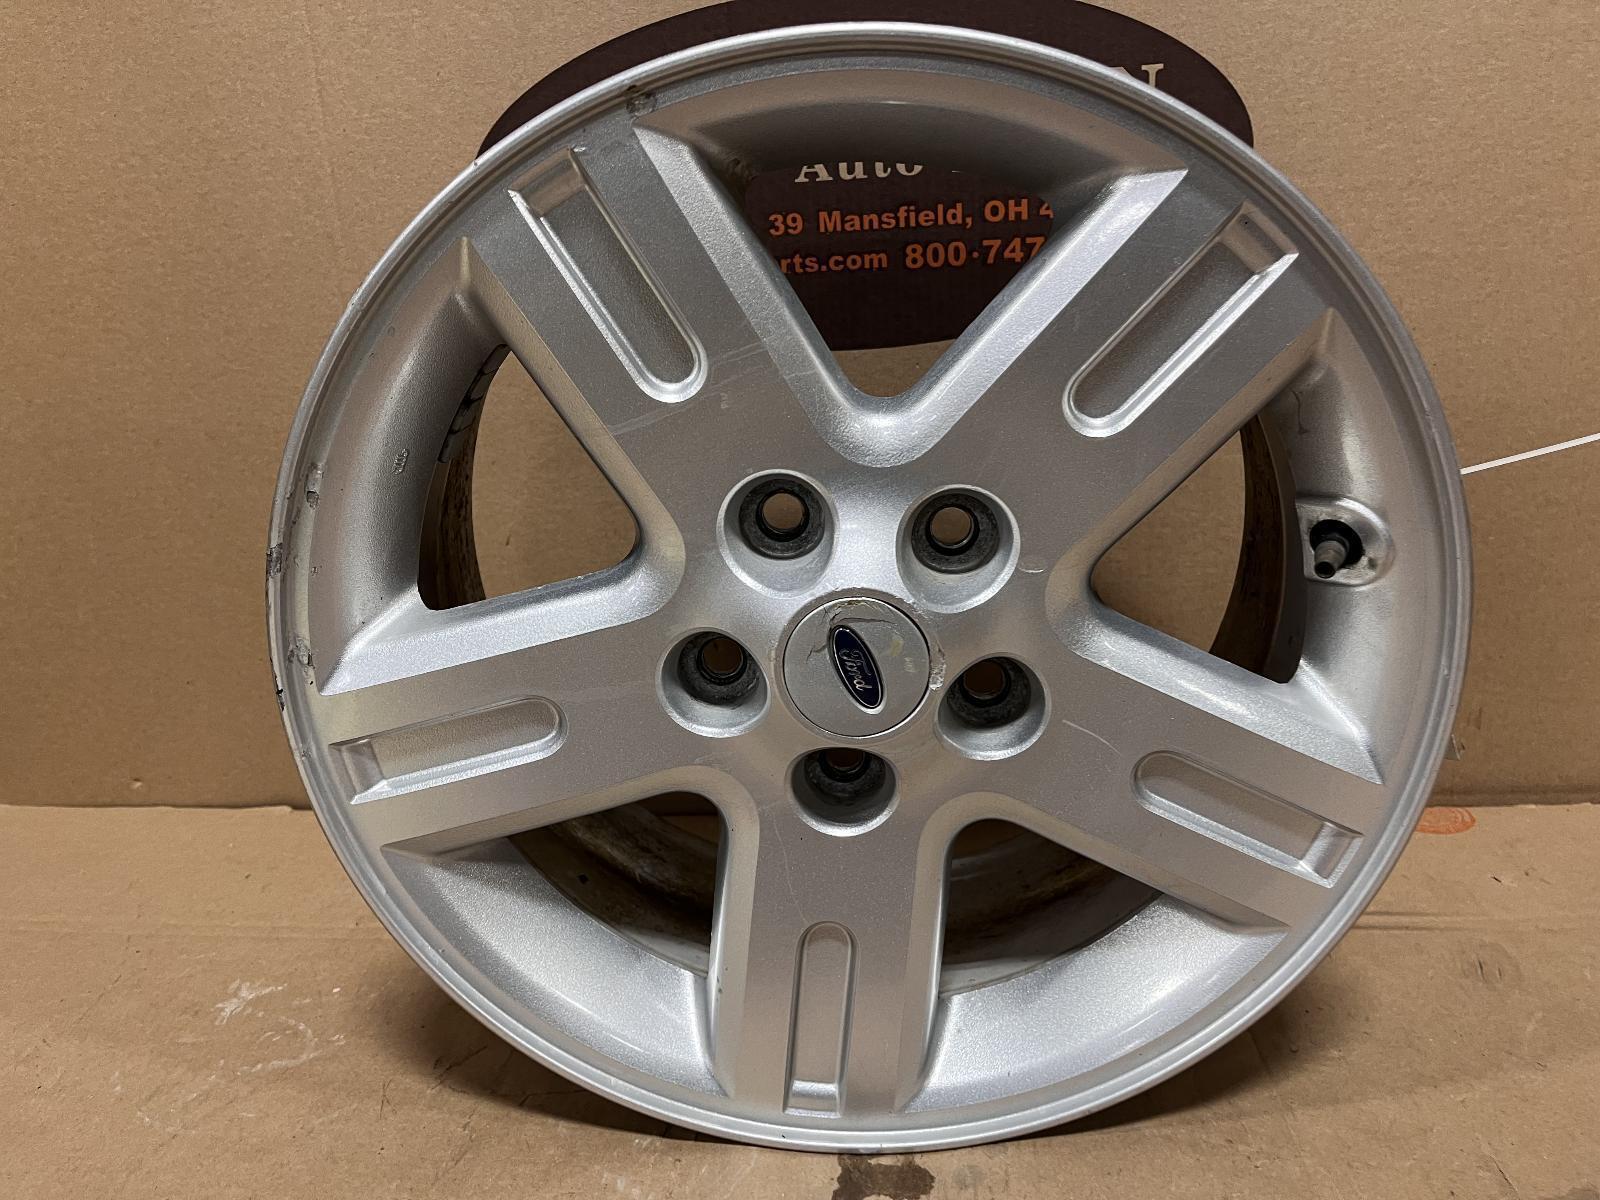 FORD ESCAPE Wheel VIN 3 (8th digit, Hybrid), 16x7 (aluminum, exposed lugs), 5 